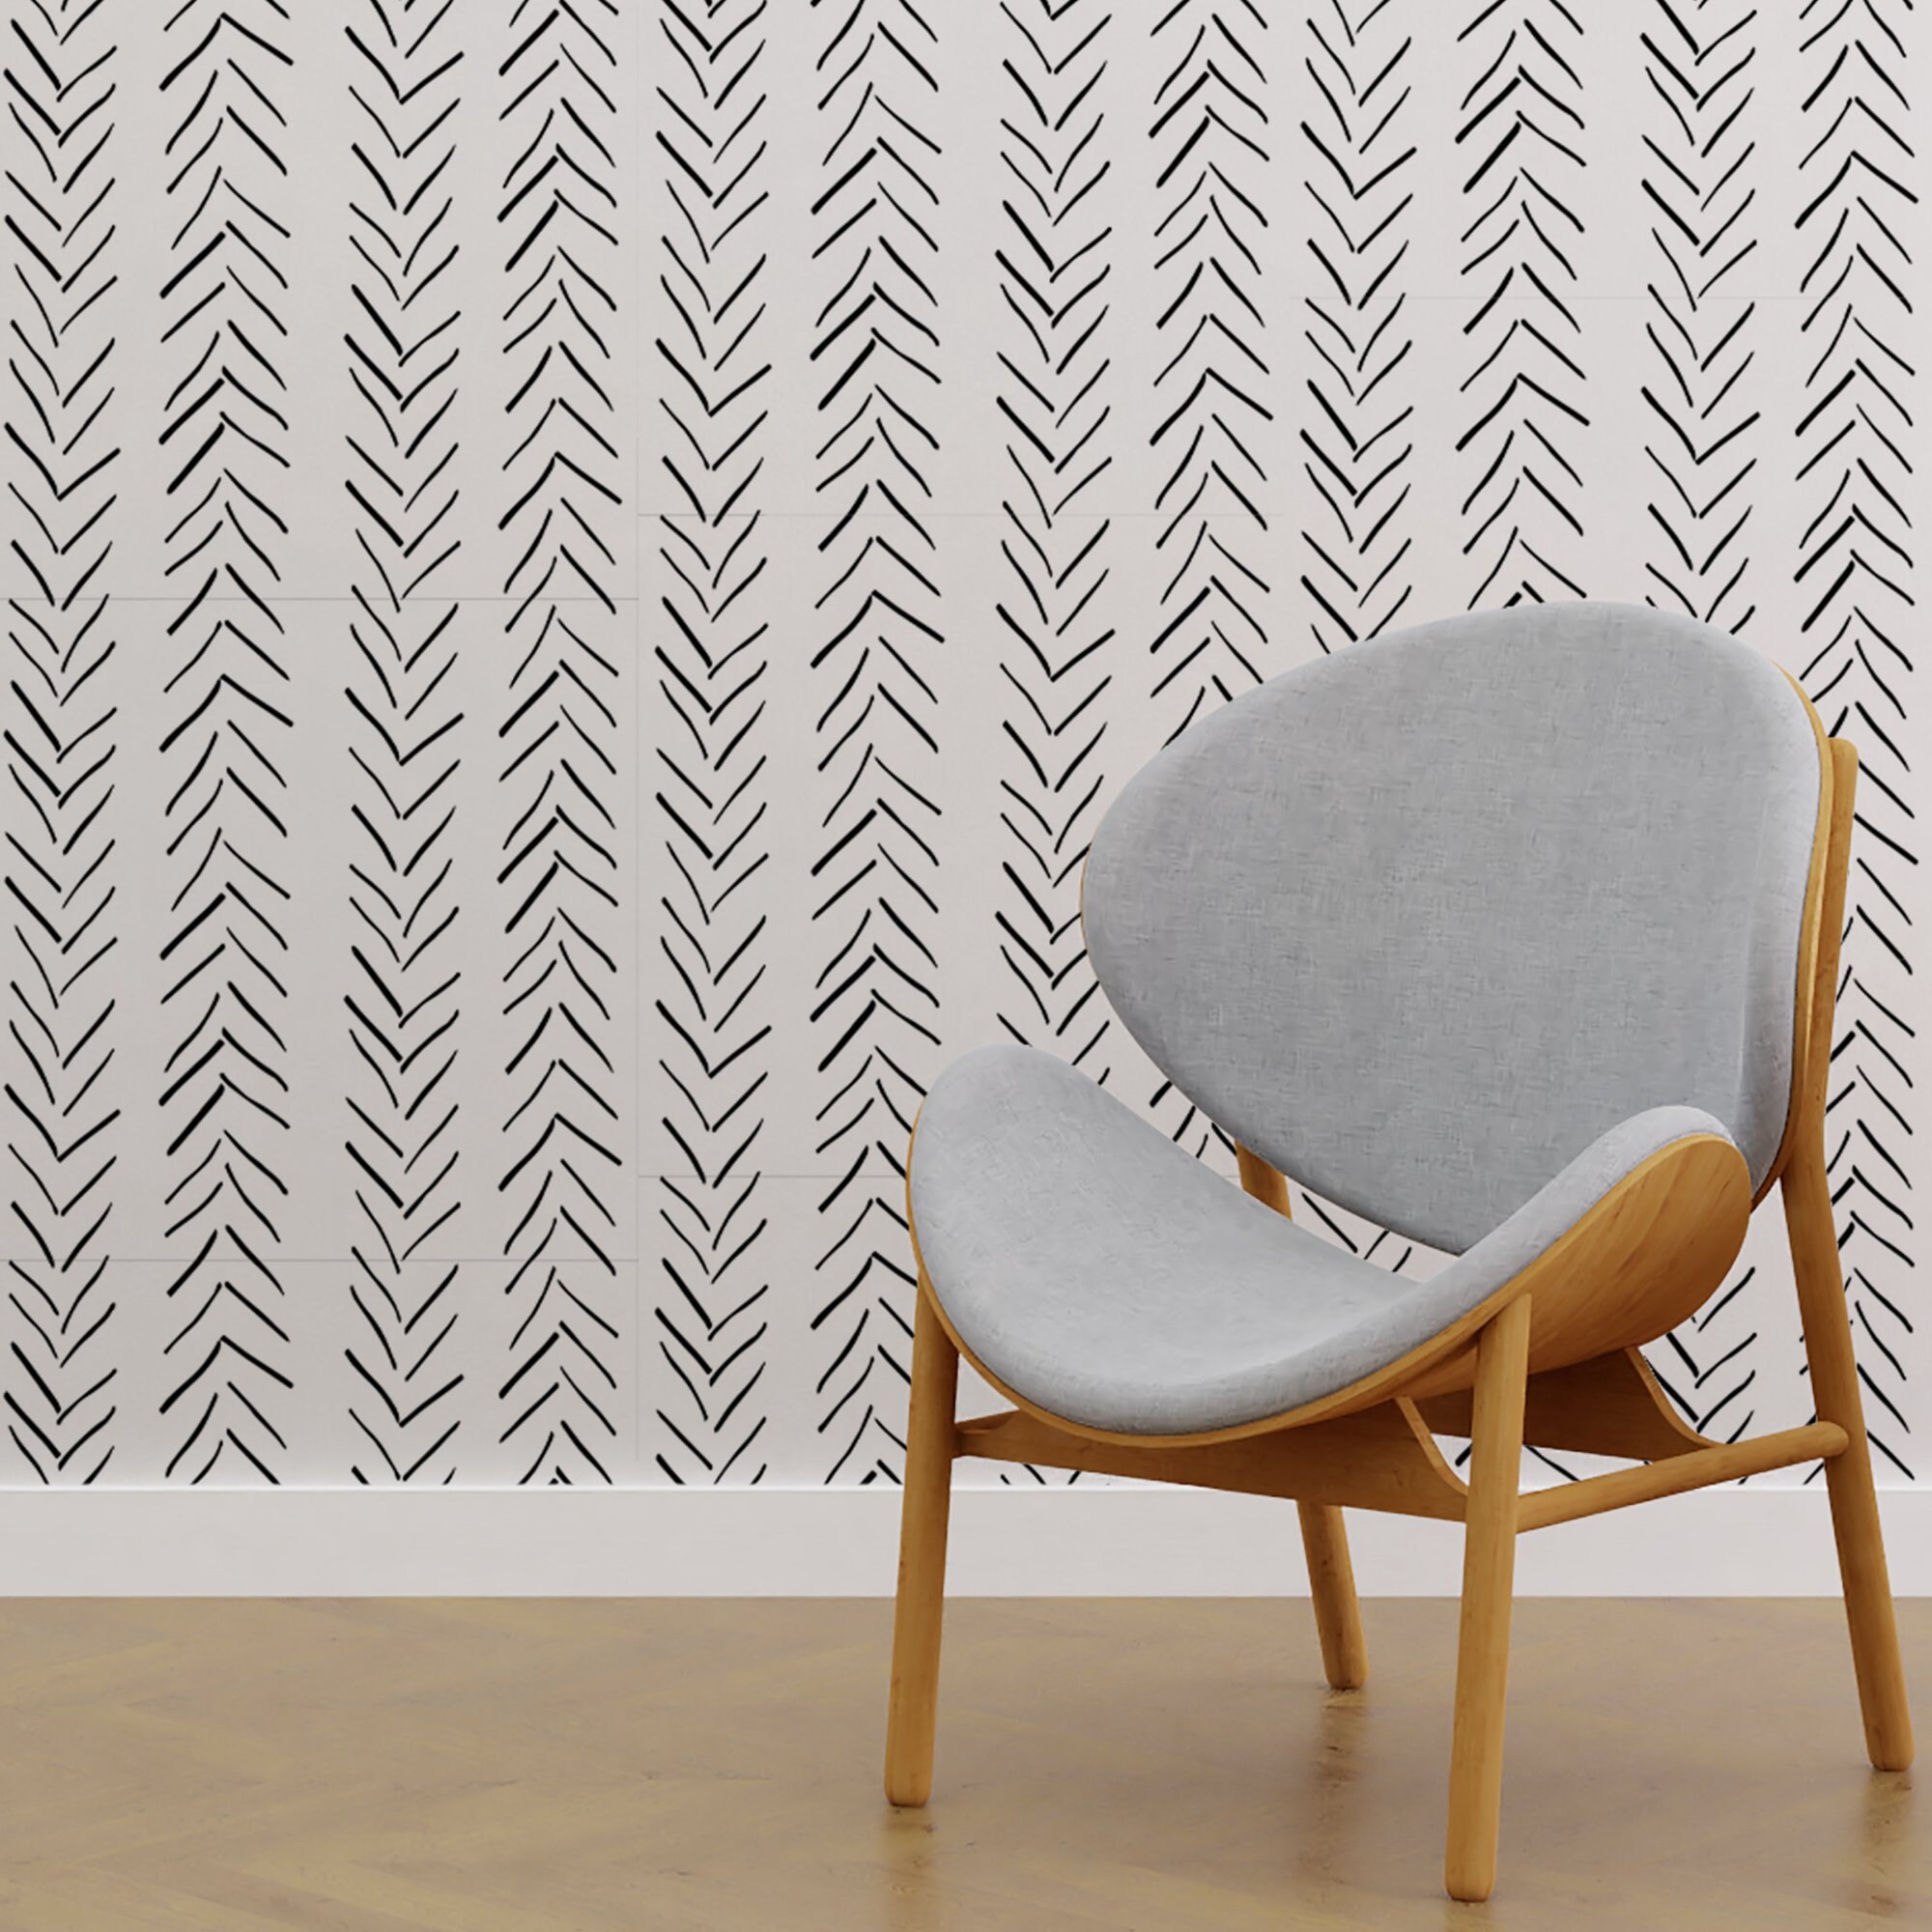 Modern Delicate Herringbone Wallpaper in Black and White - Etsy